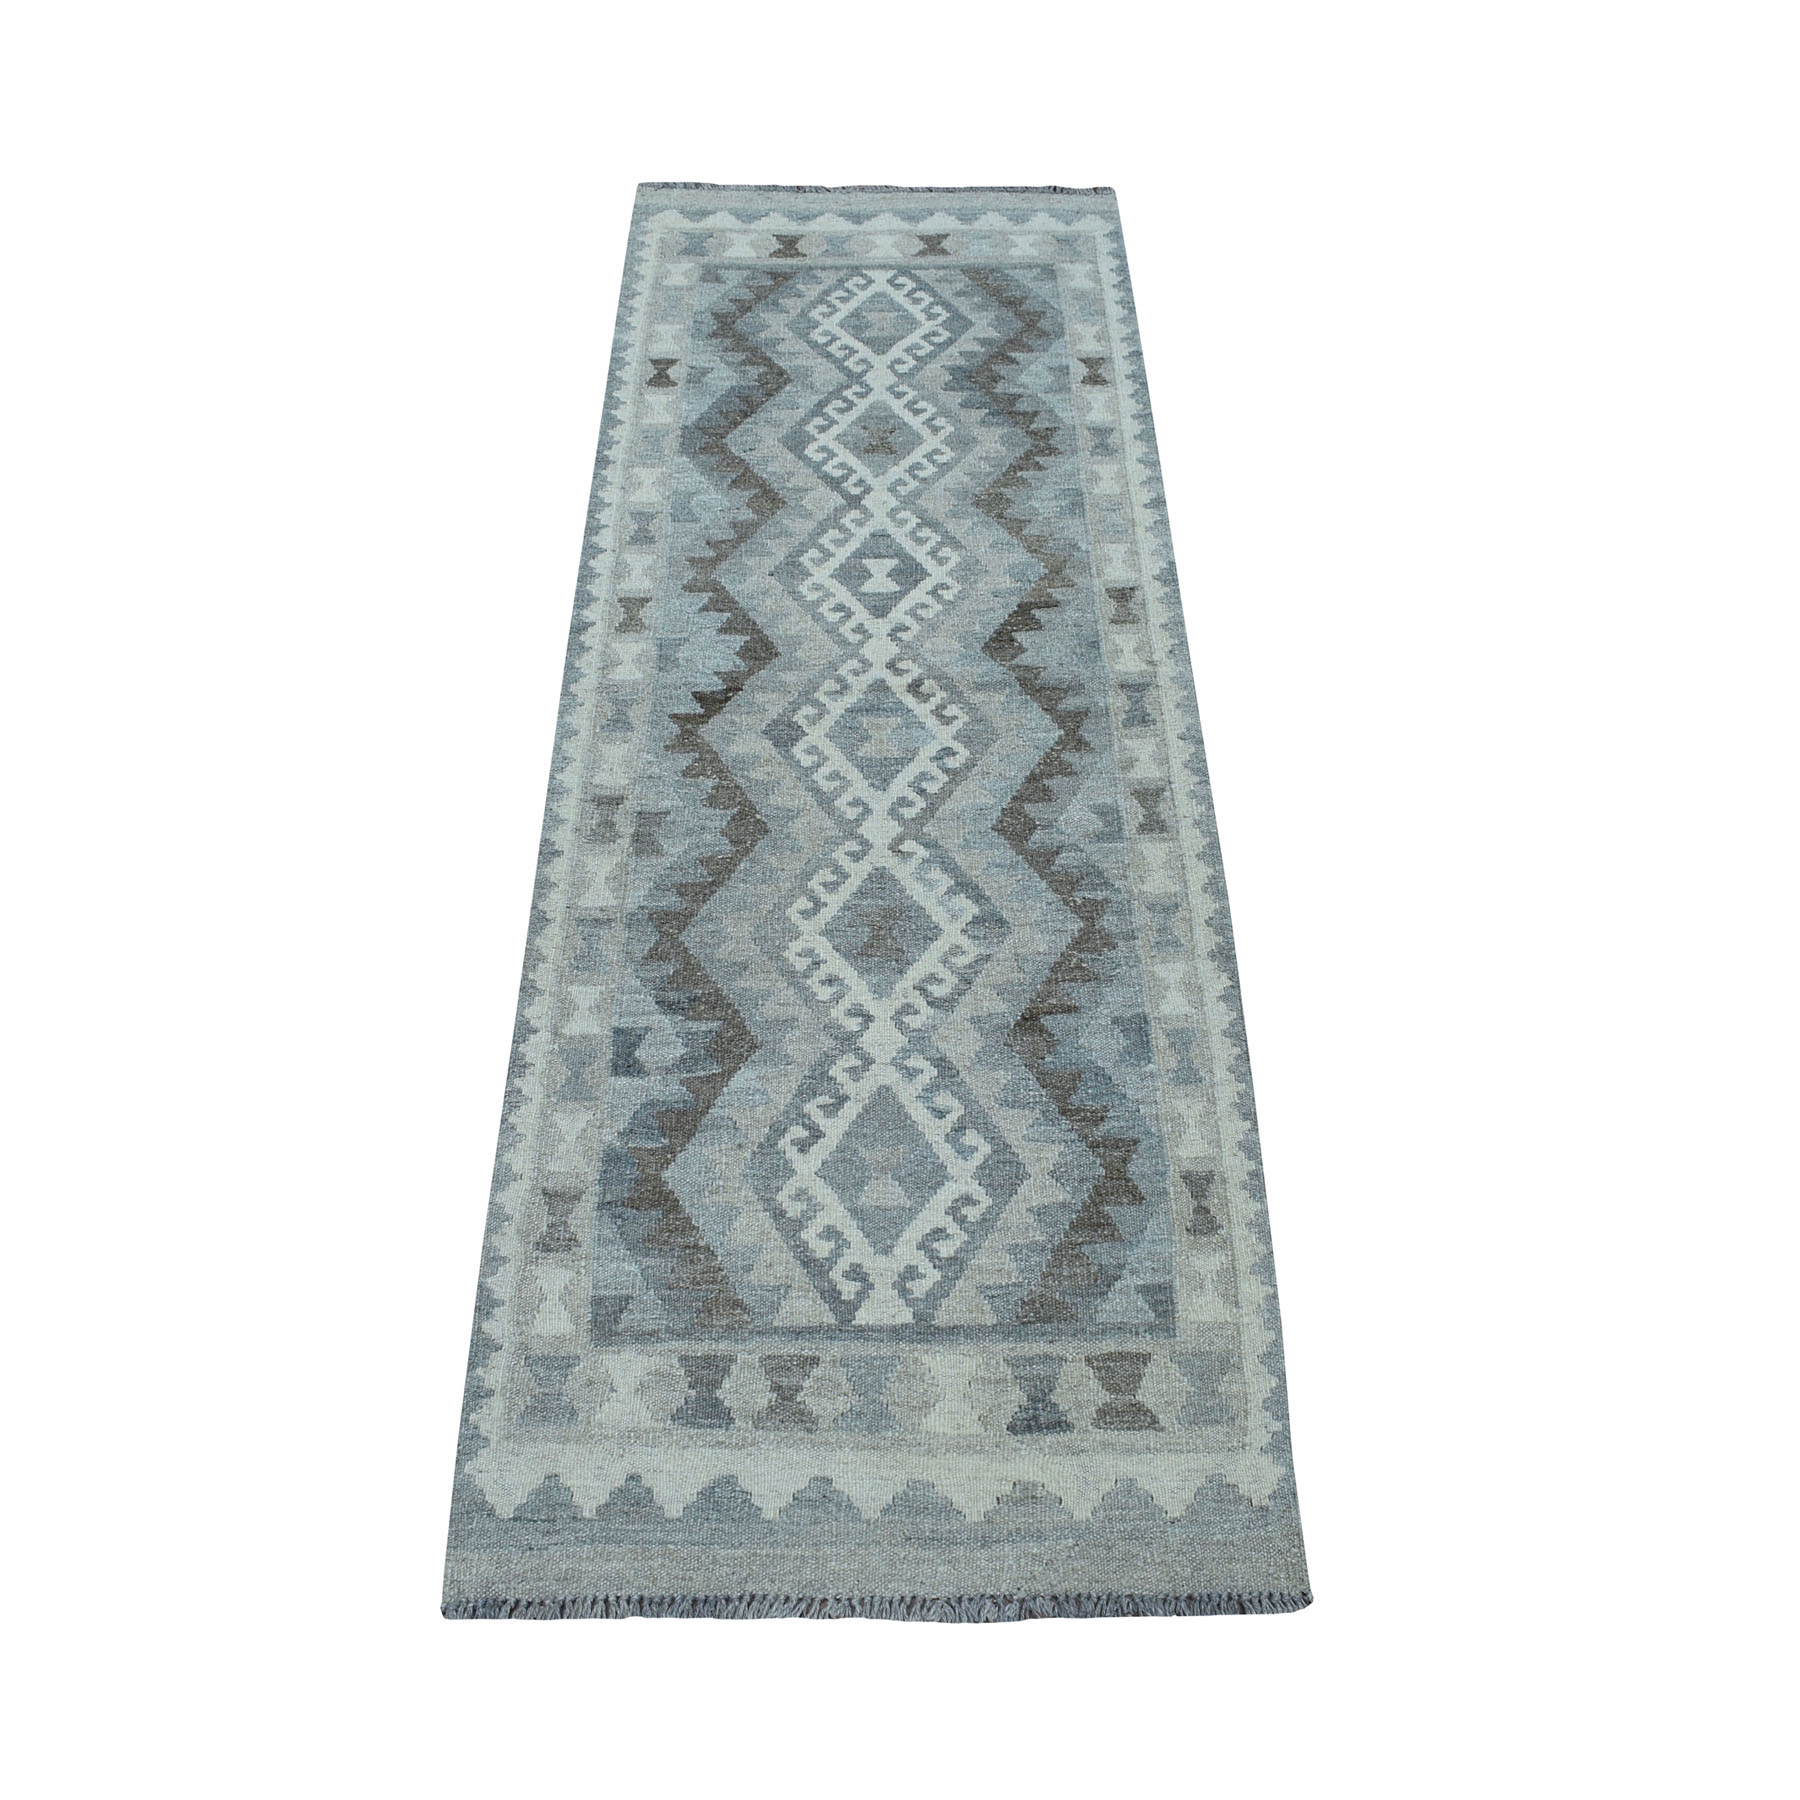 2'1"X6' Undyed Natural Wool Afghan Kilim Reversible Hand Woven Runner Oriental Rug moaec06b